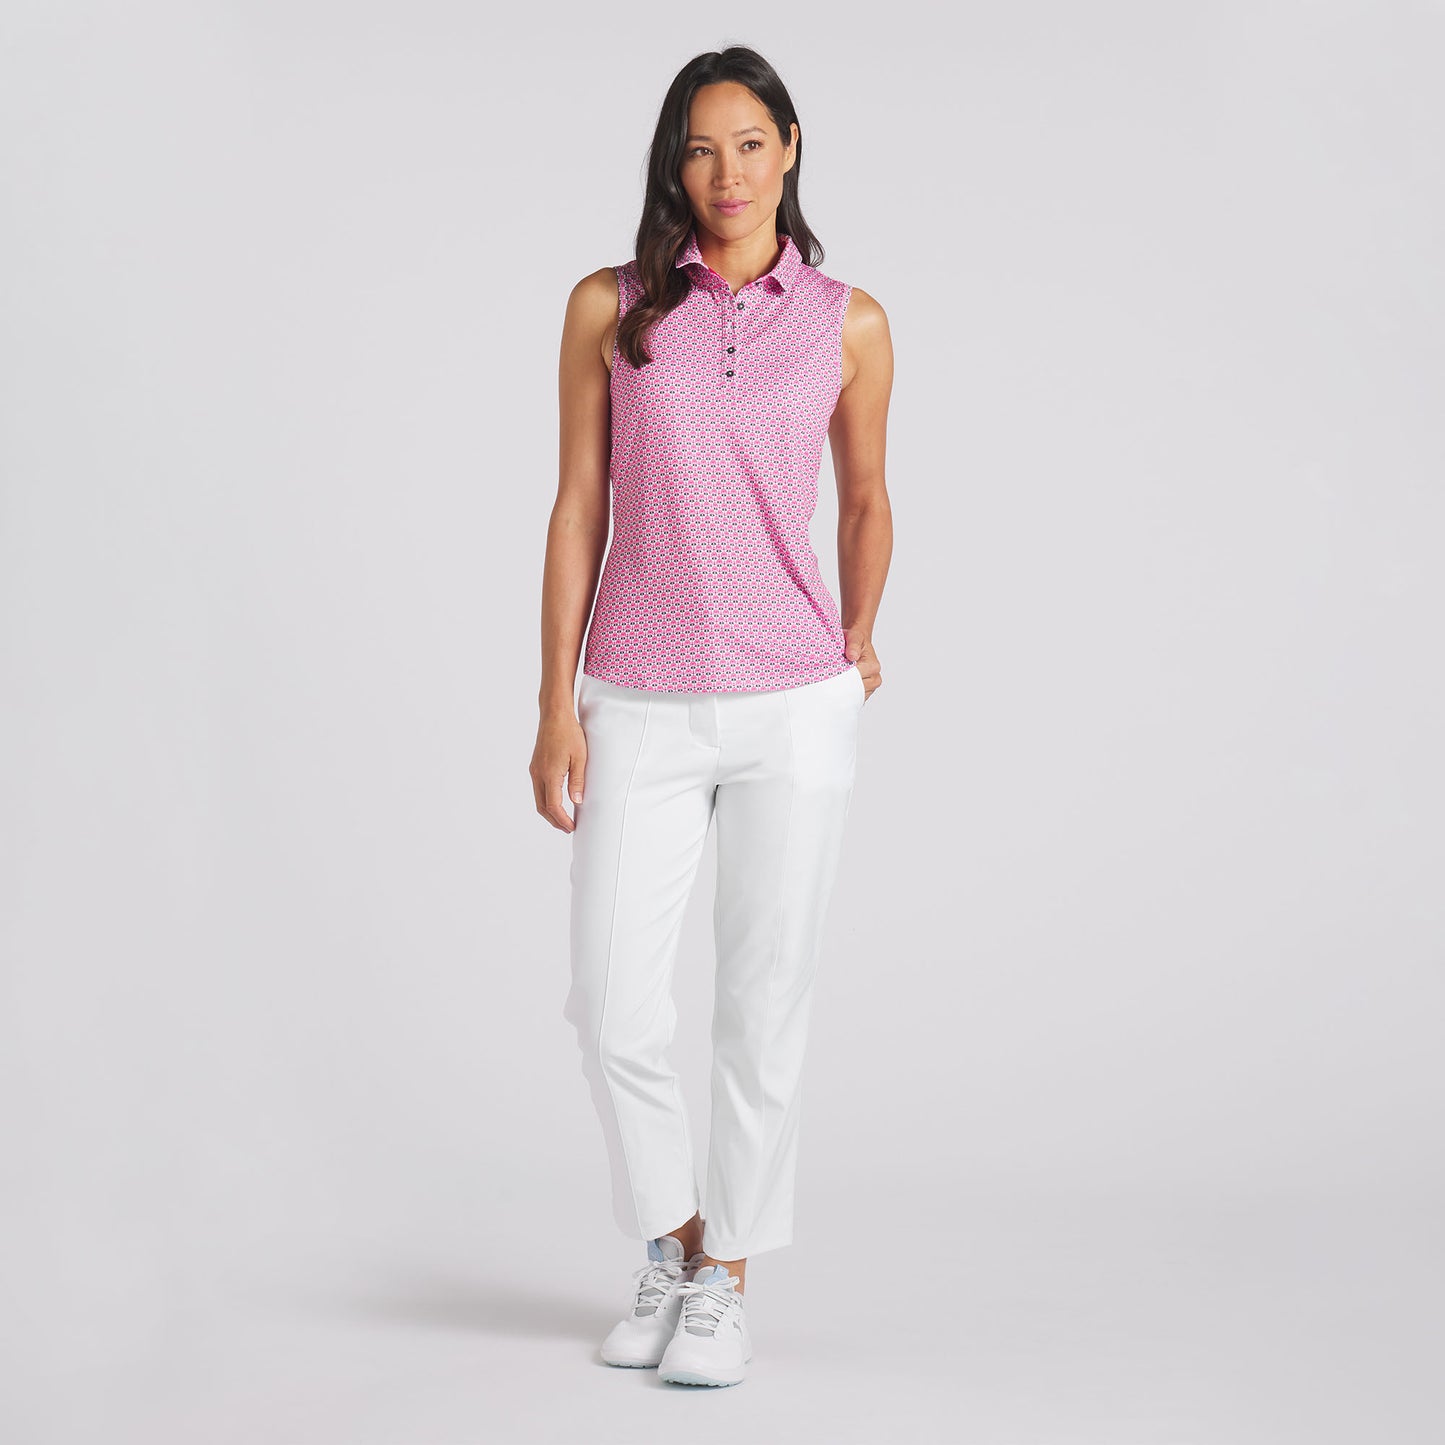 Puma Women's Sleeveless Polo with MATTR in White Glow-Garnet Rose Palm Print